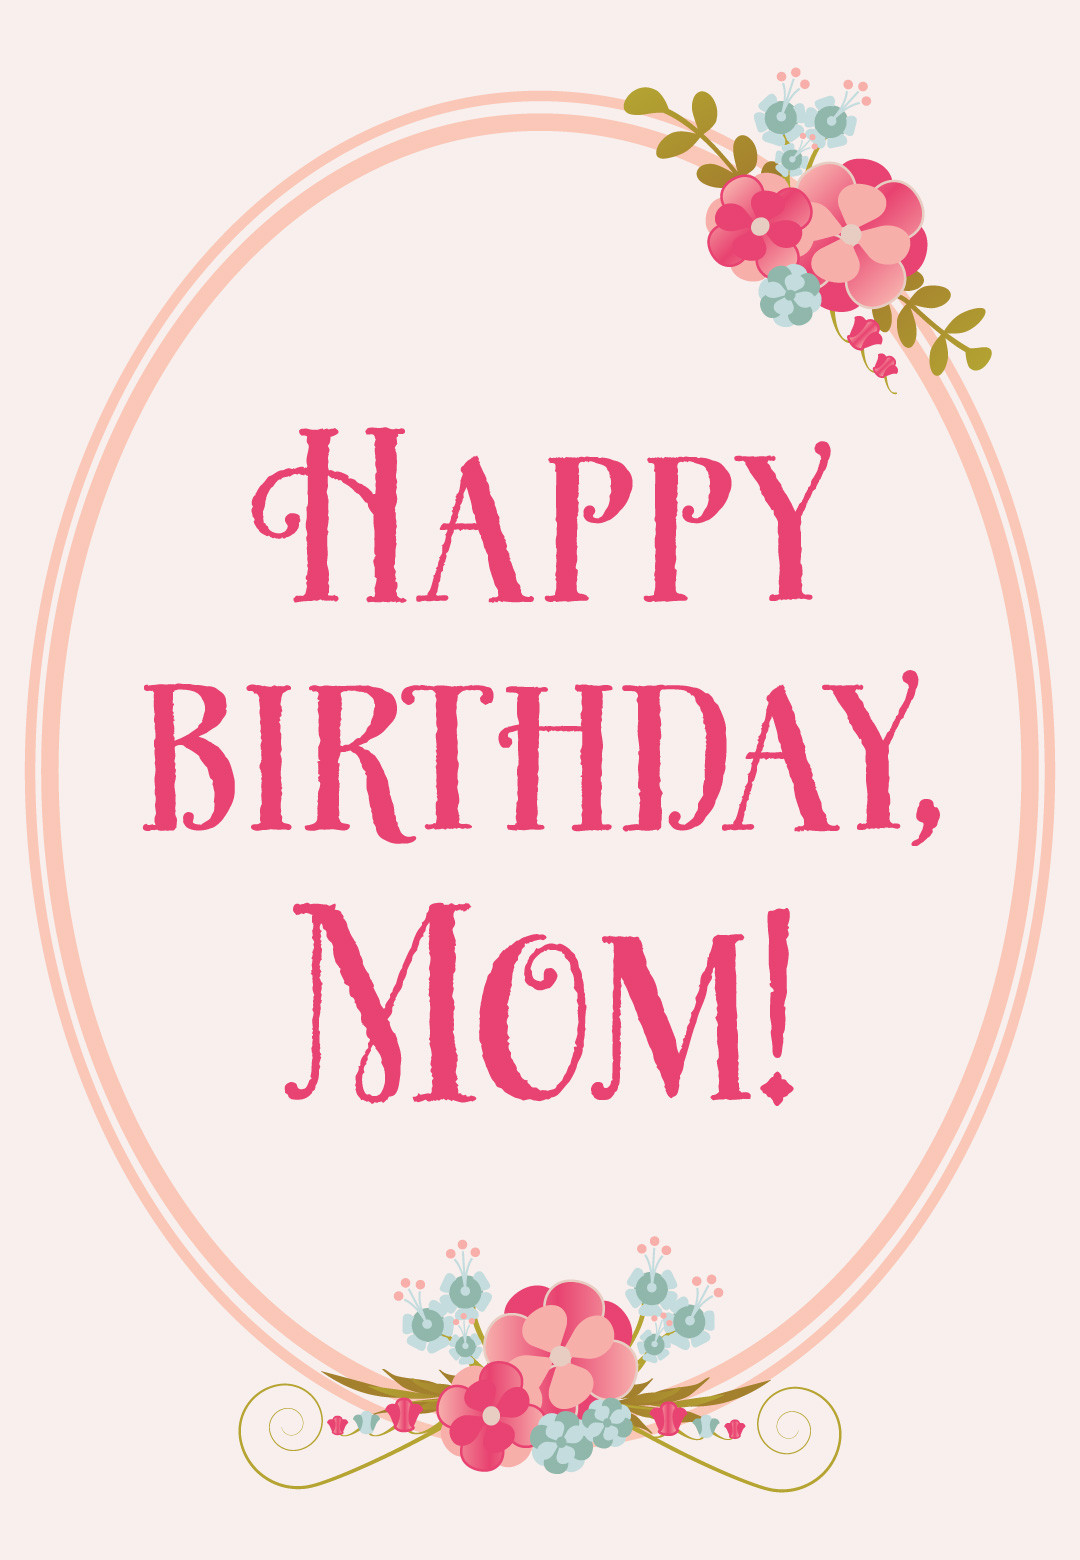 Mom Birthday Card Printable
 Floral Birthday for Mom Free Birthday Card